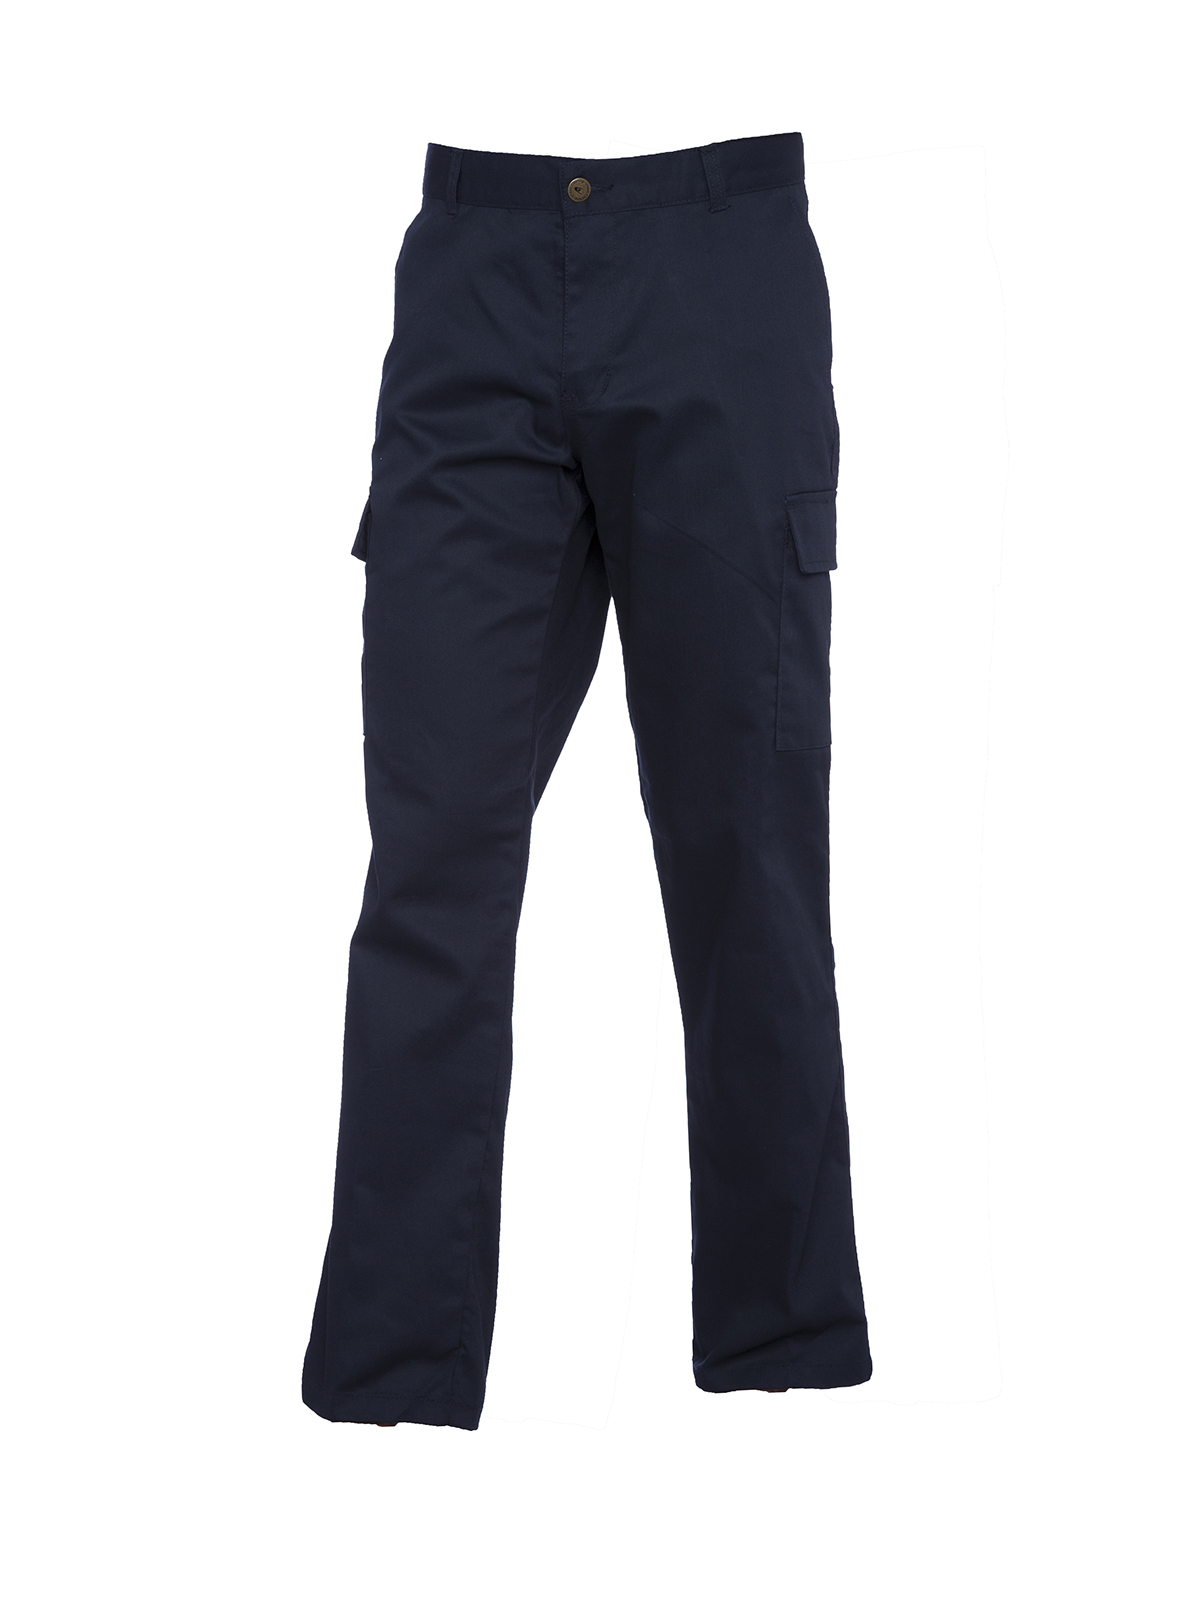 Ladies Cargo Trousers, Navy - Size 20